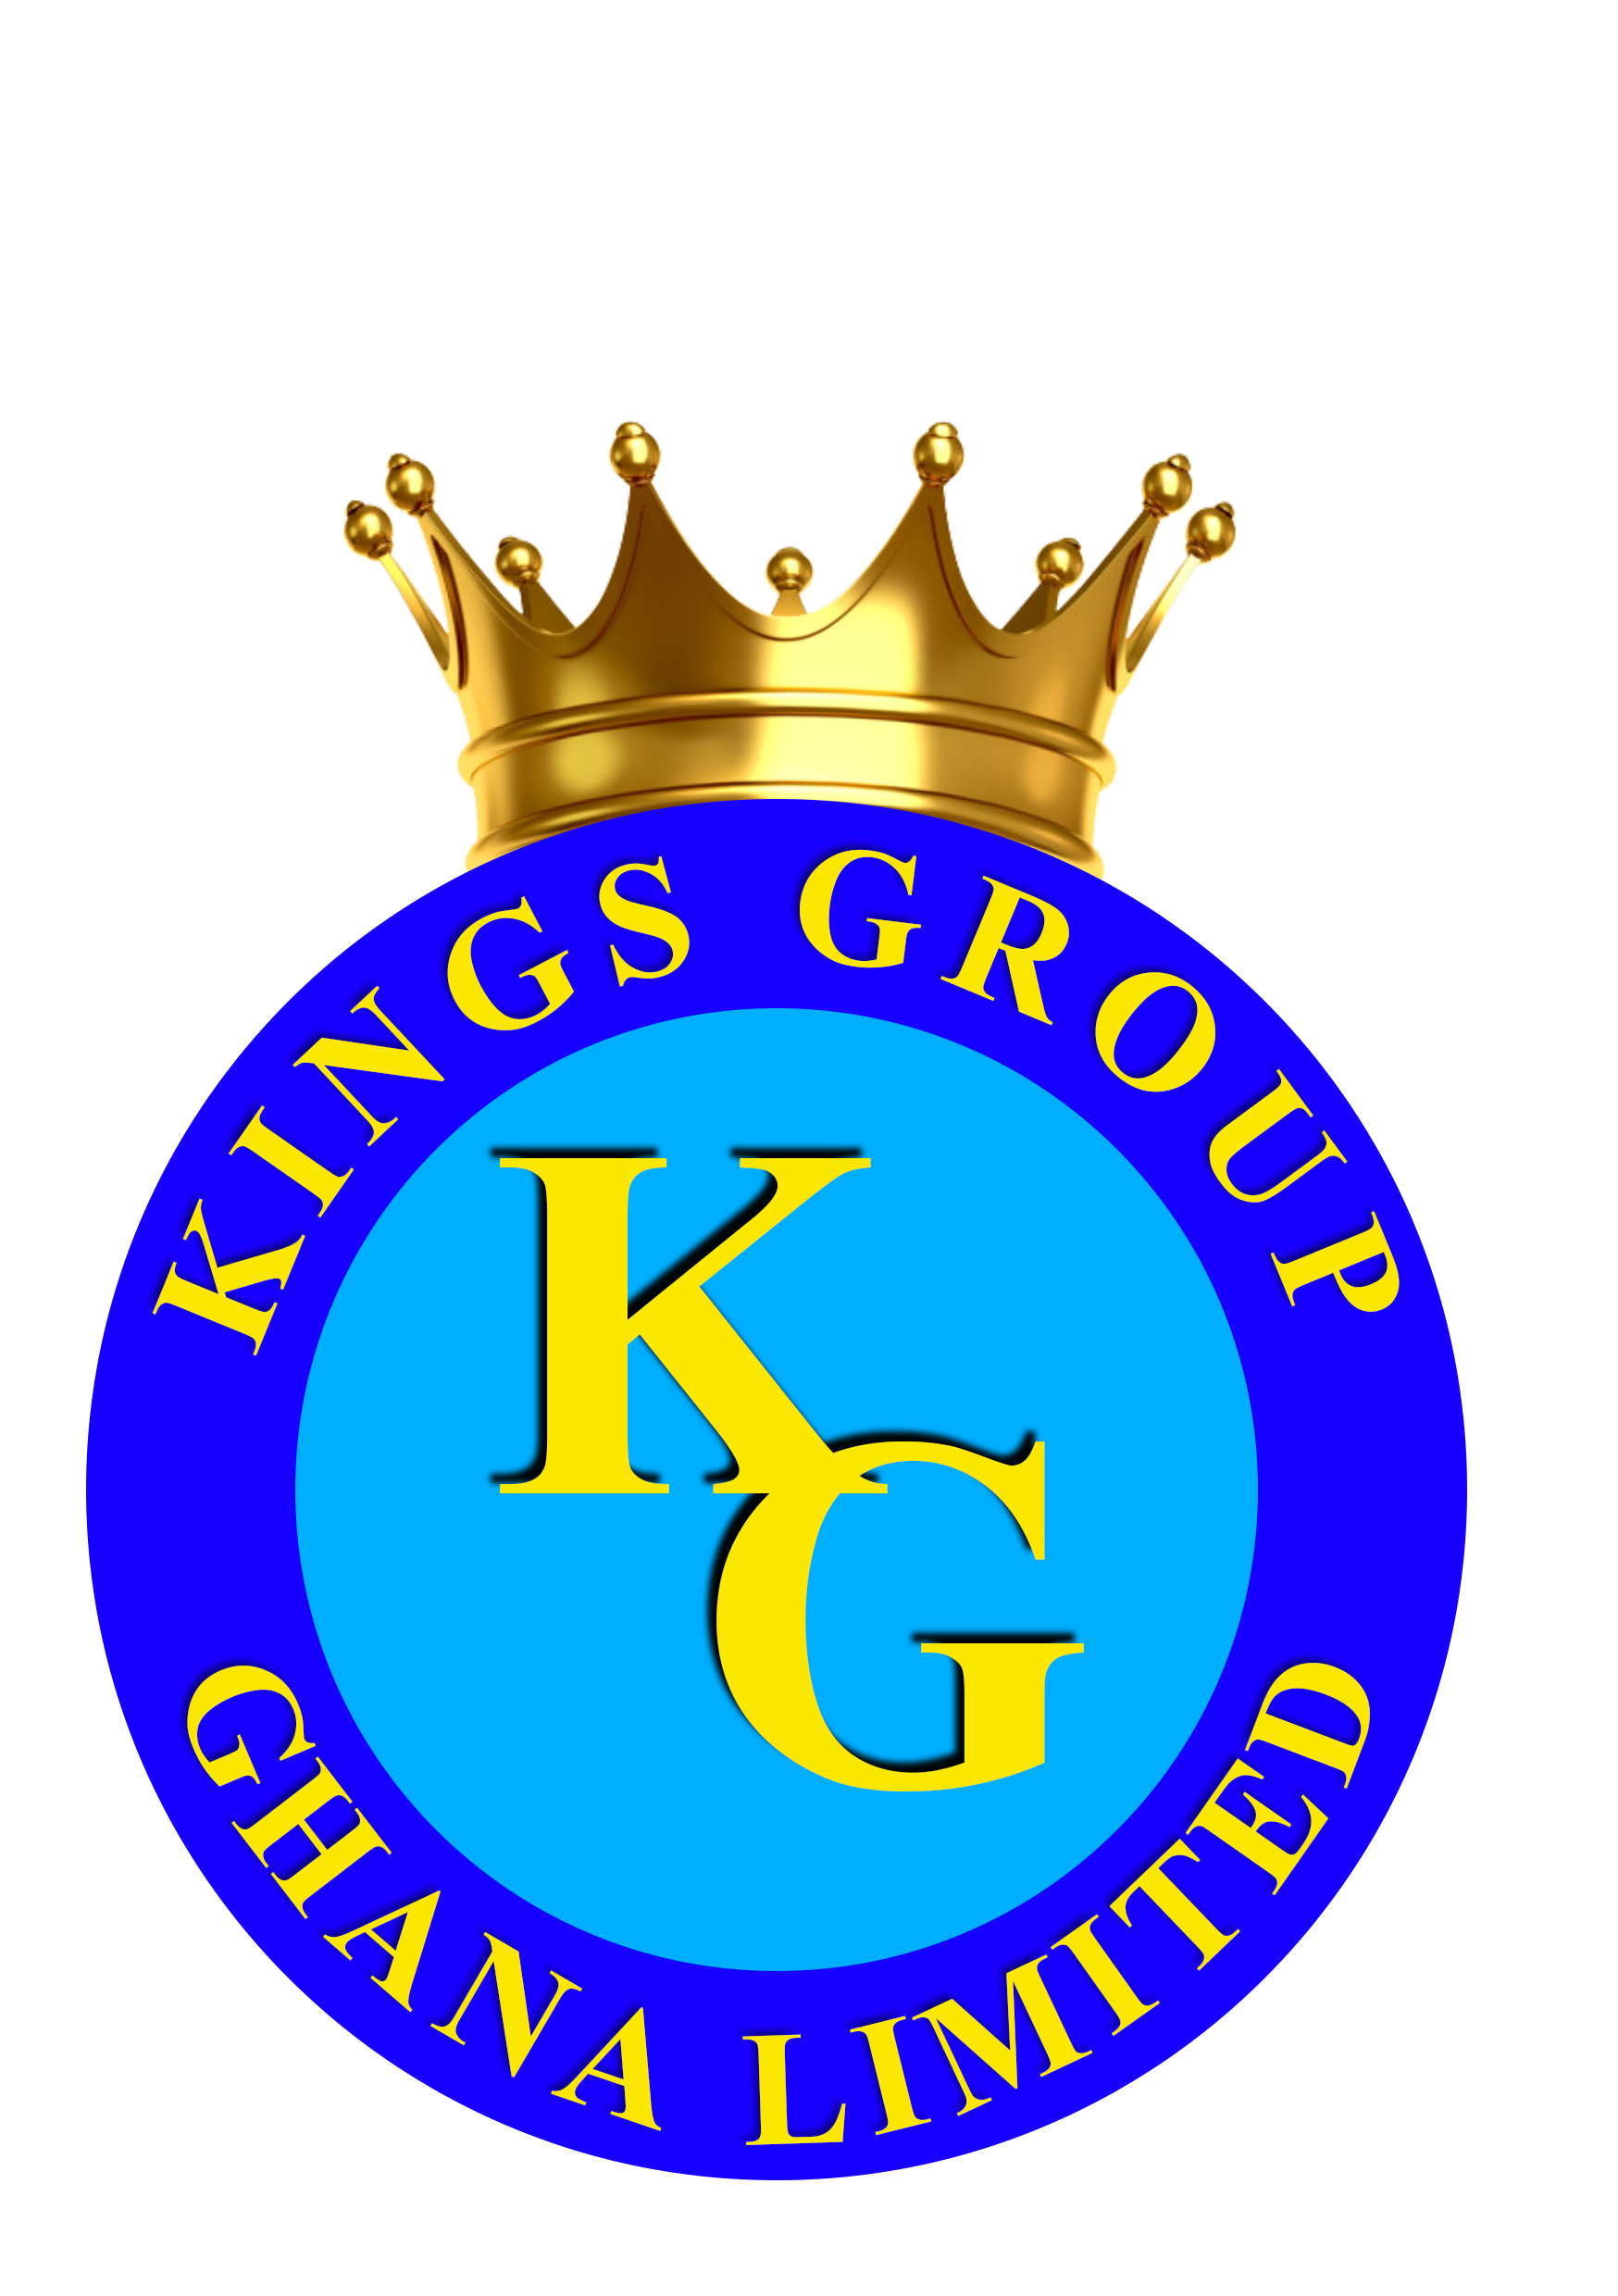 www.kingsgroup.com.gh